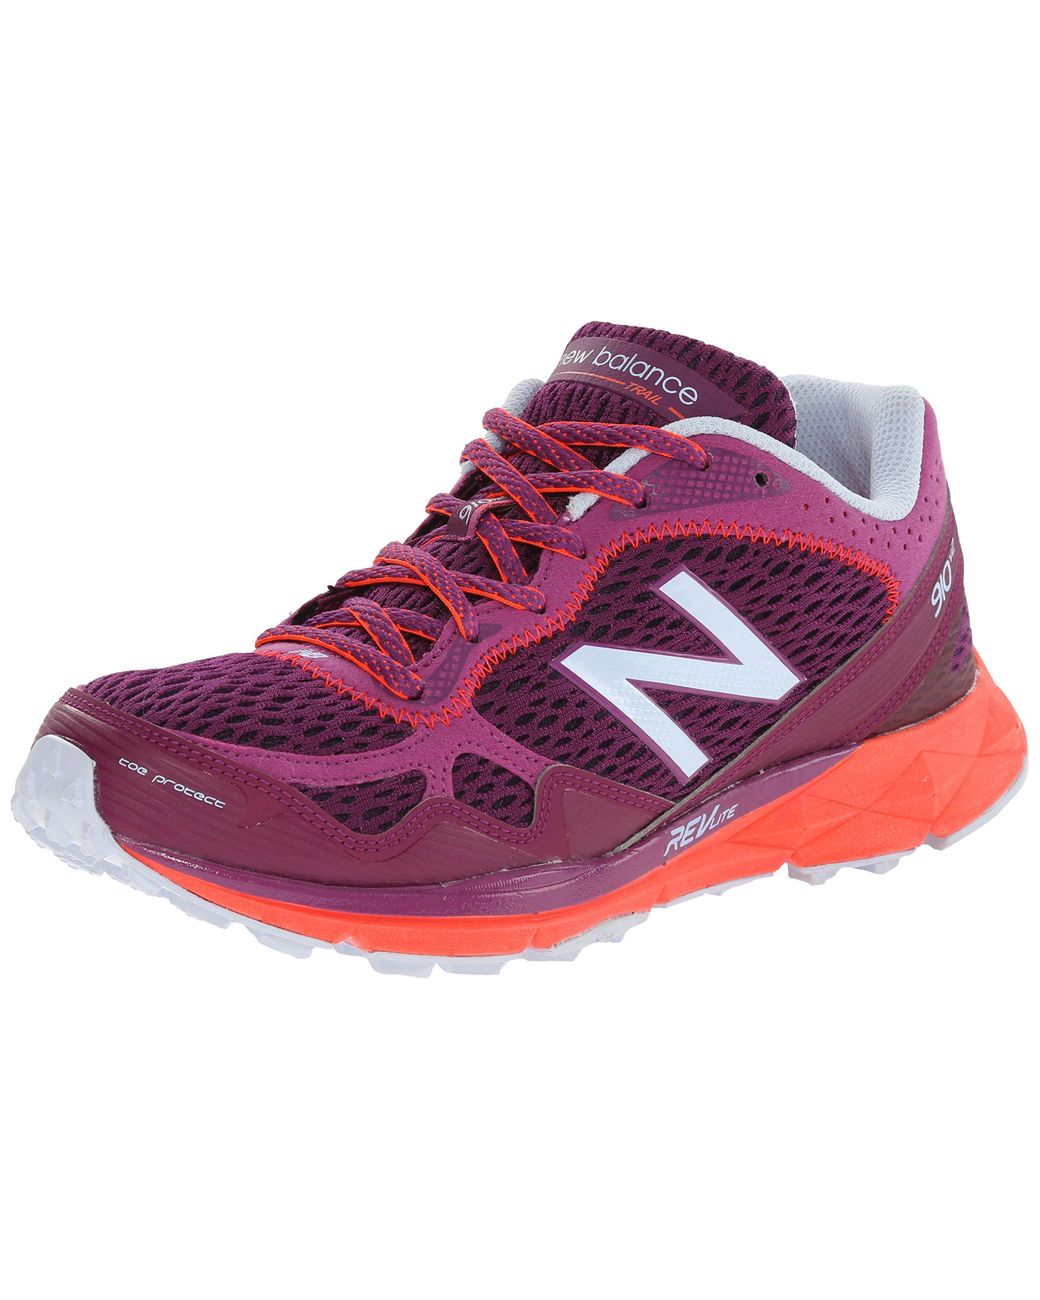 New Balance 910 V2 Trail Running Shoe in Purple | Lyst